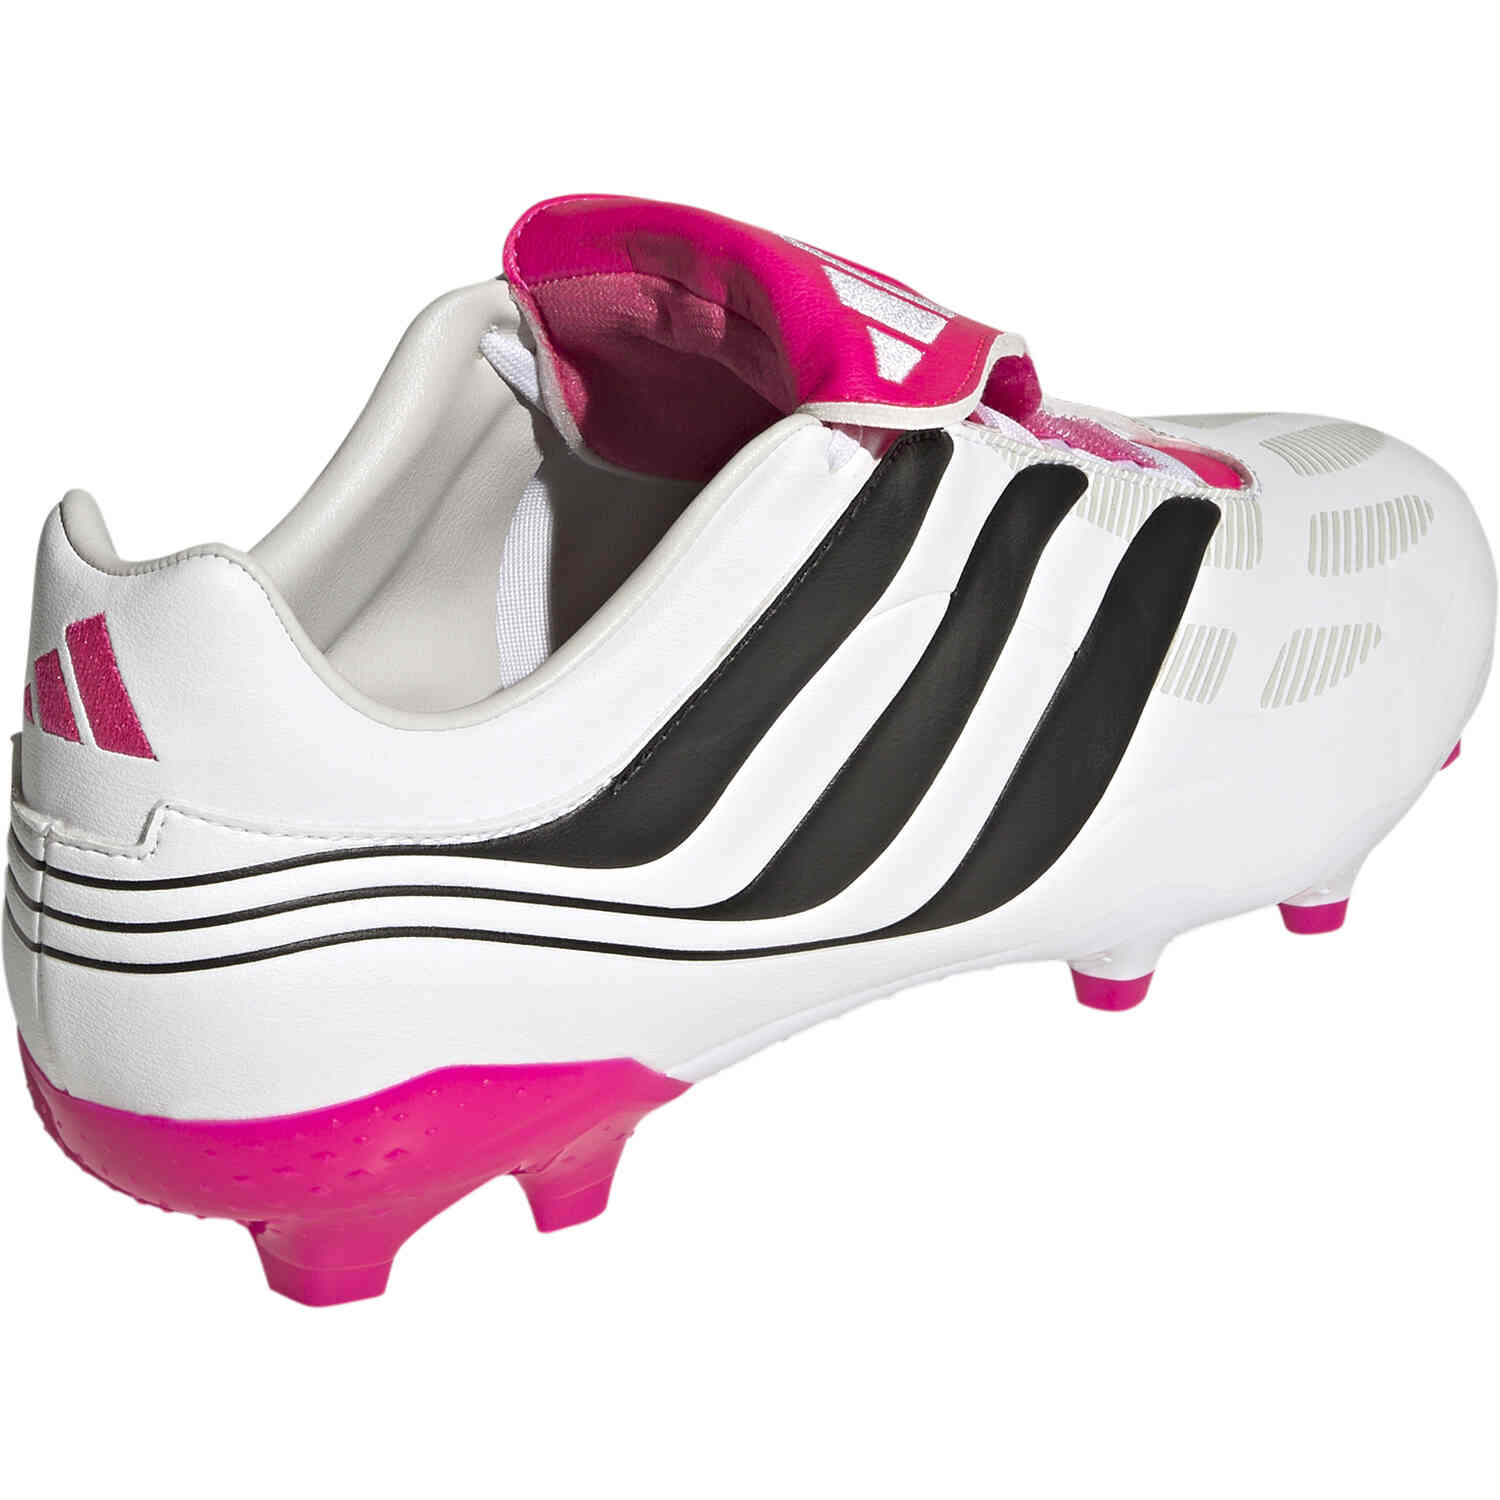 Adidas Predator Precision.3 FG Soccer Cleats - White / Black / Pink 7